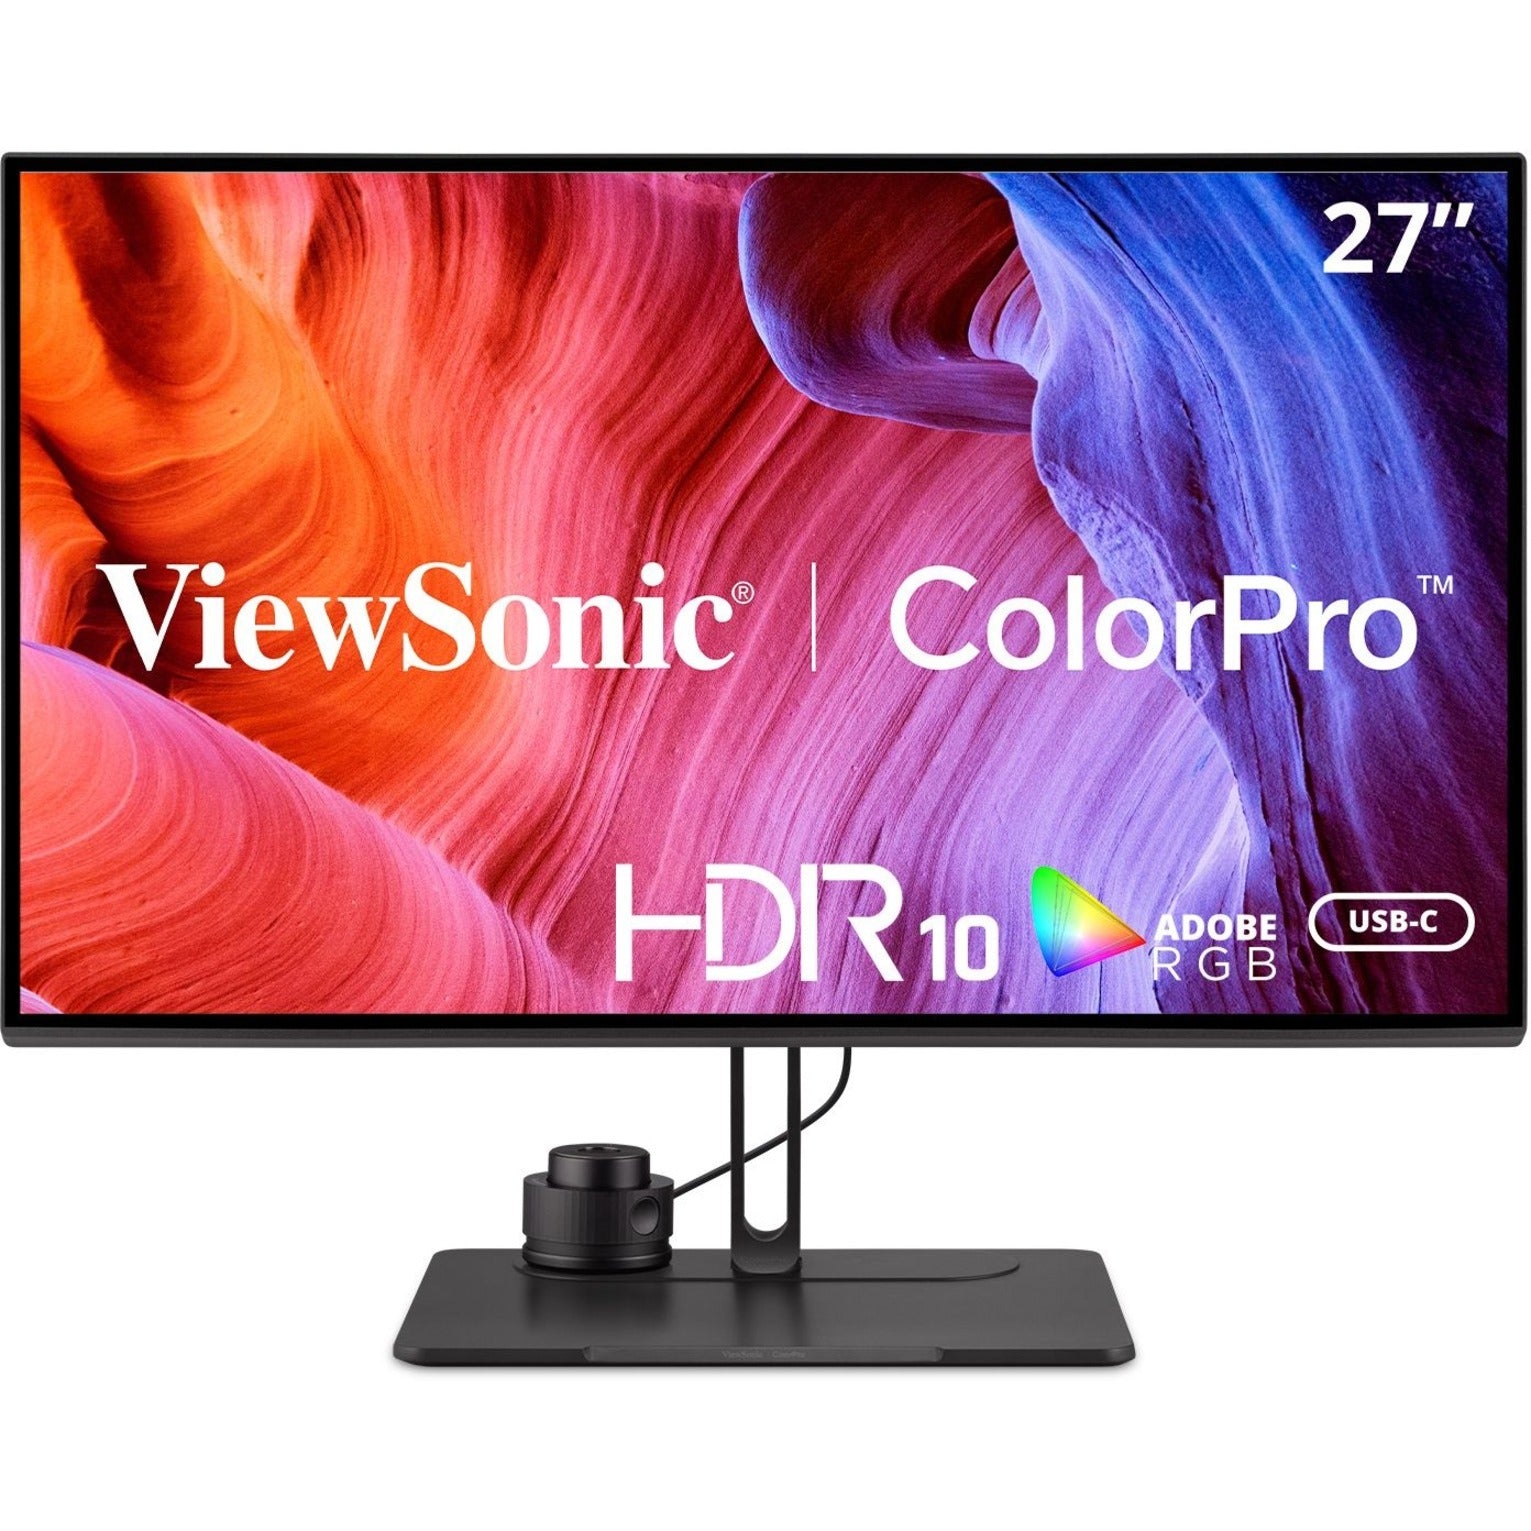 ViewSonic VP2786-4K ColorPro 27" 4K UHD IPS Monitor, True 10-Bit Color, USB-C, 120Hz Refresh Rate